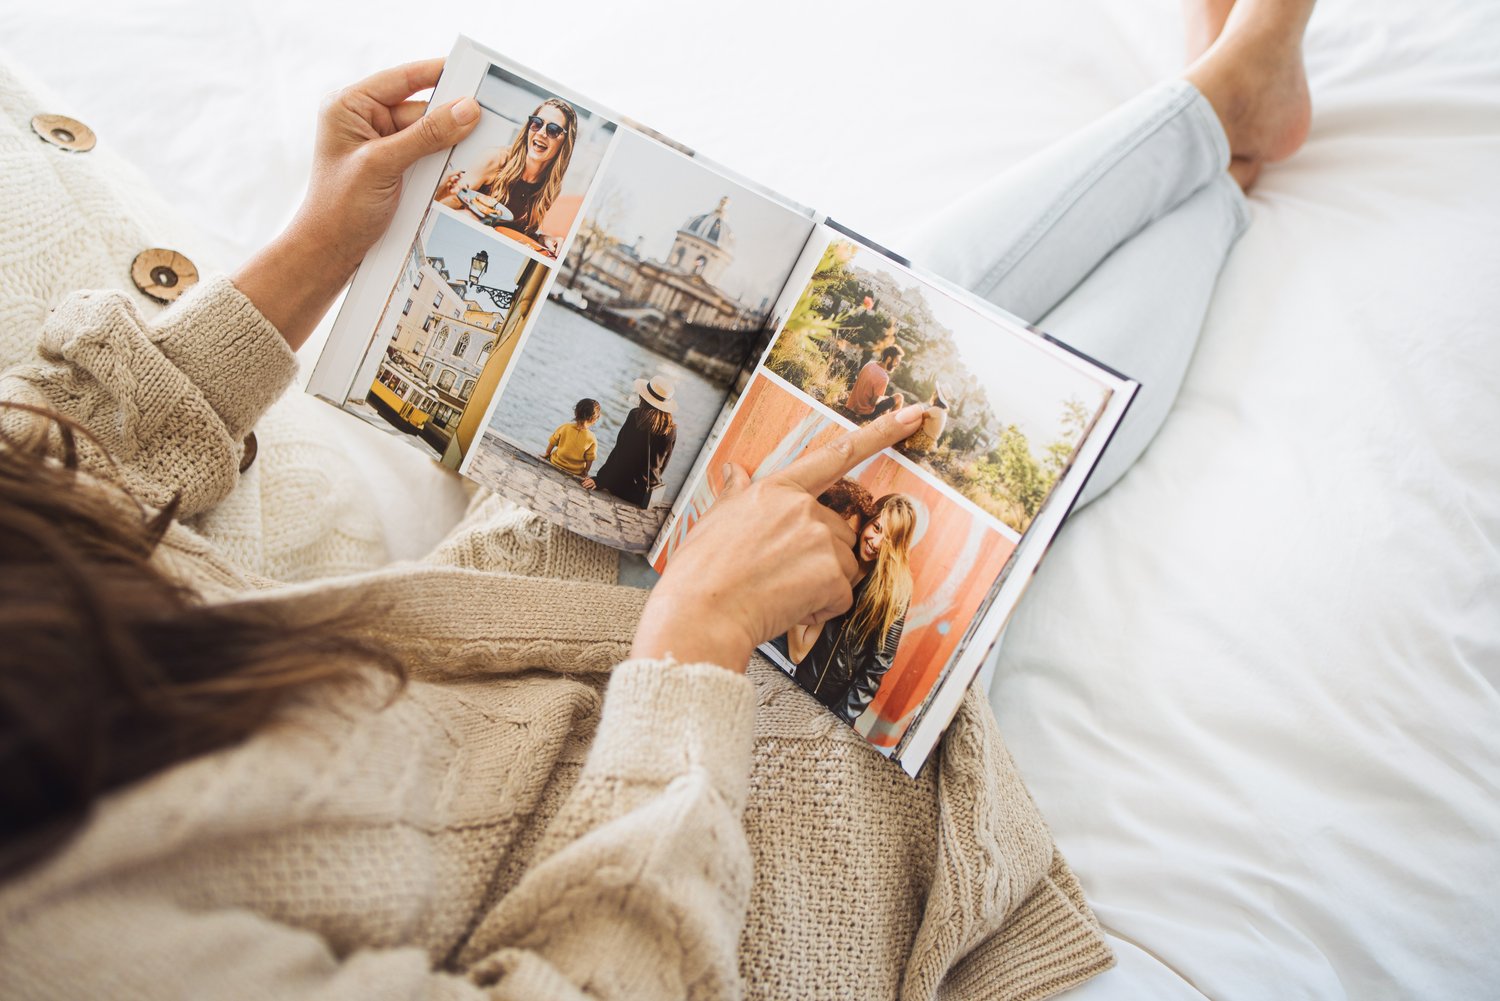 Small Photo Album, Family Photo Album, Travel Photo Book, Photo Memory  Book, Personalized Photo Album 